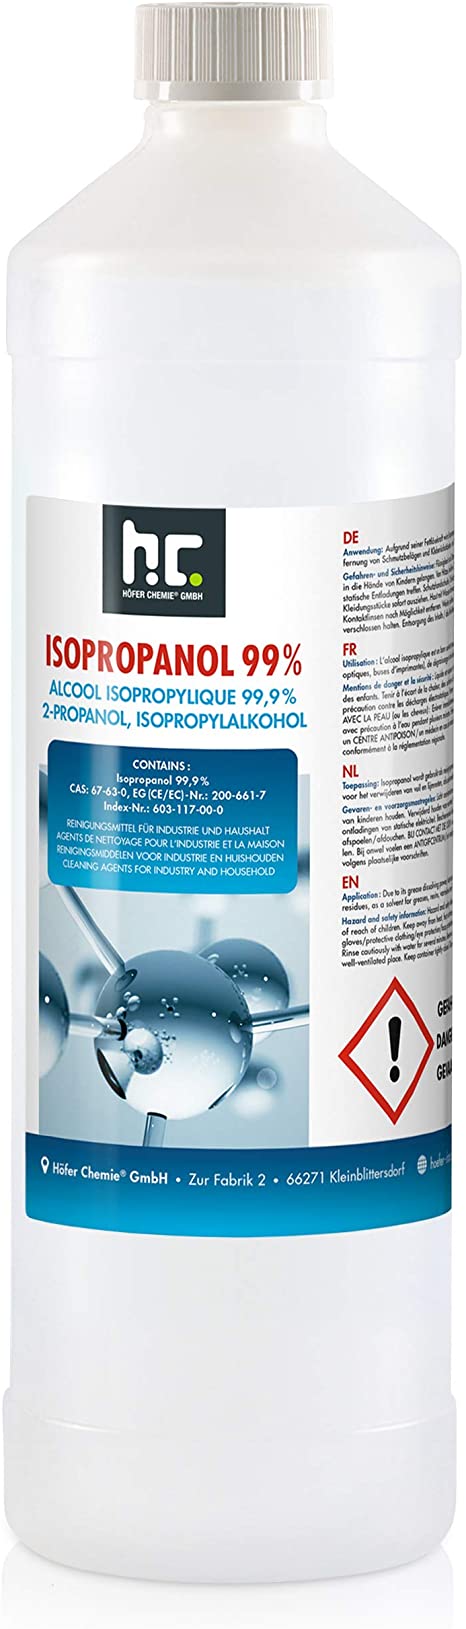 Achetez en gros Iso Alcool Propylique 99,9%/alcool Isopropylique